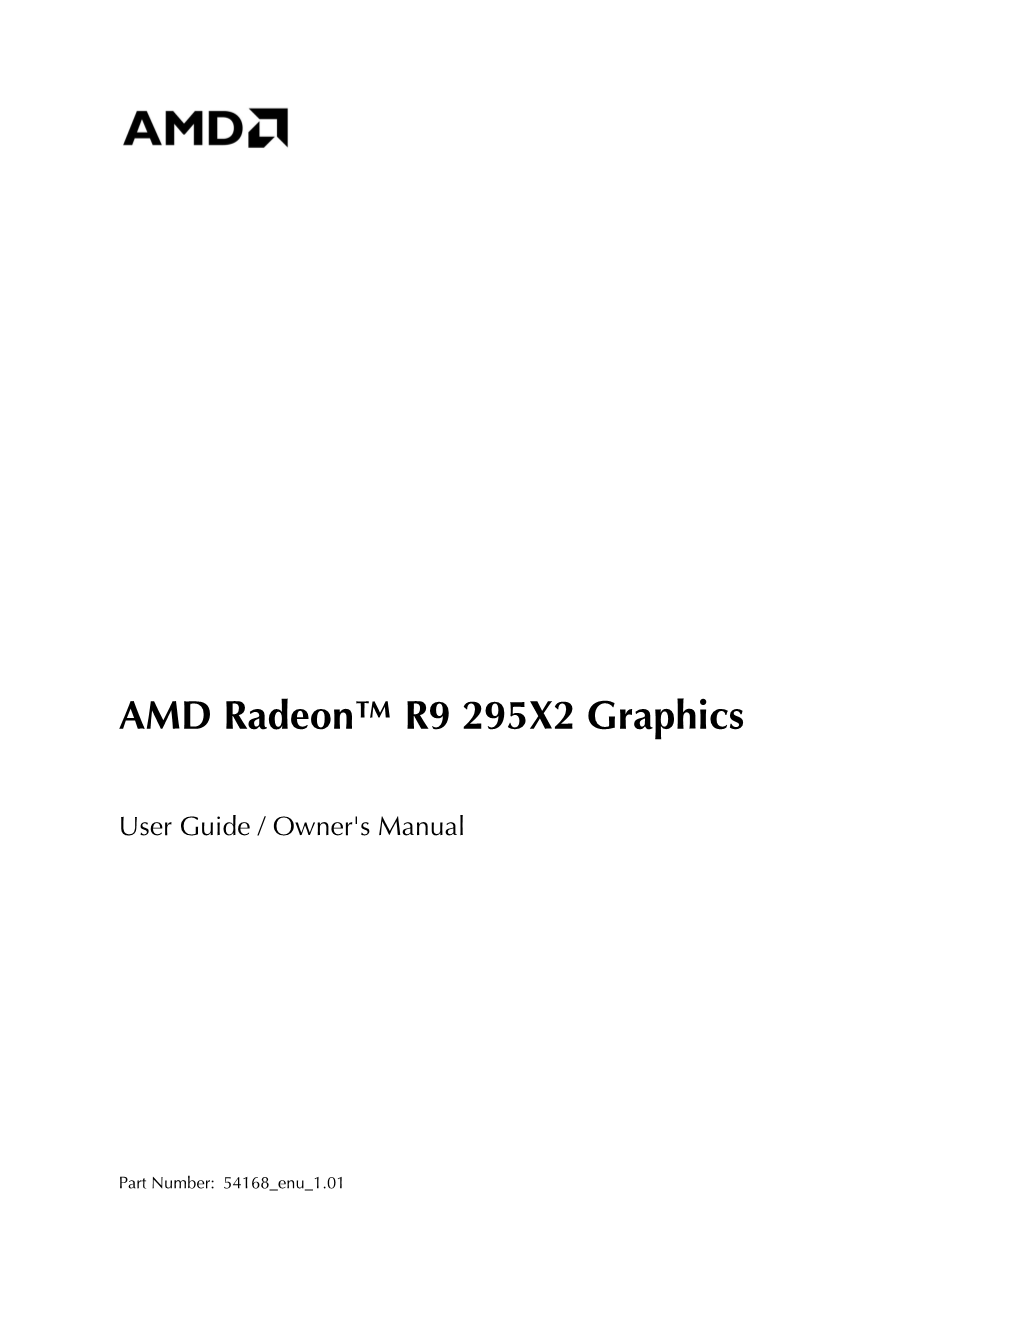 AMD Radeon™ R9 295X2 Graphics